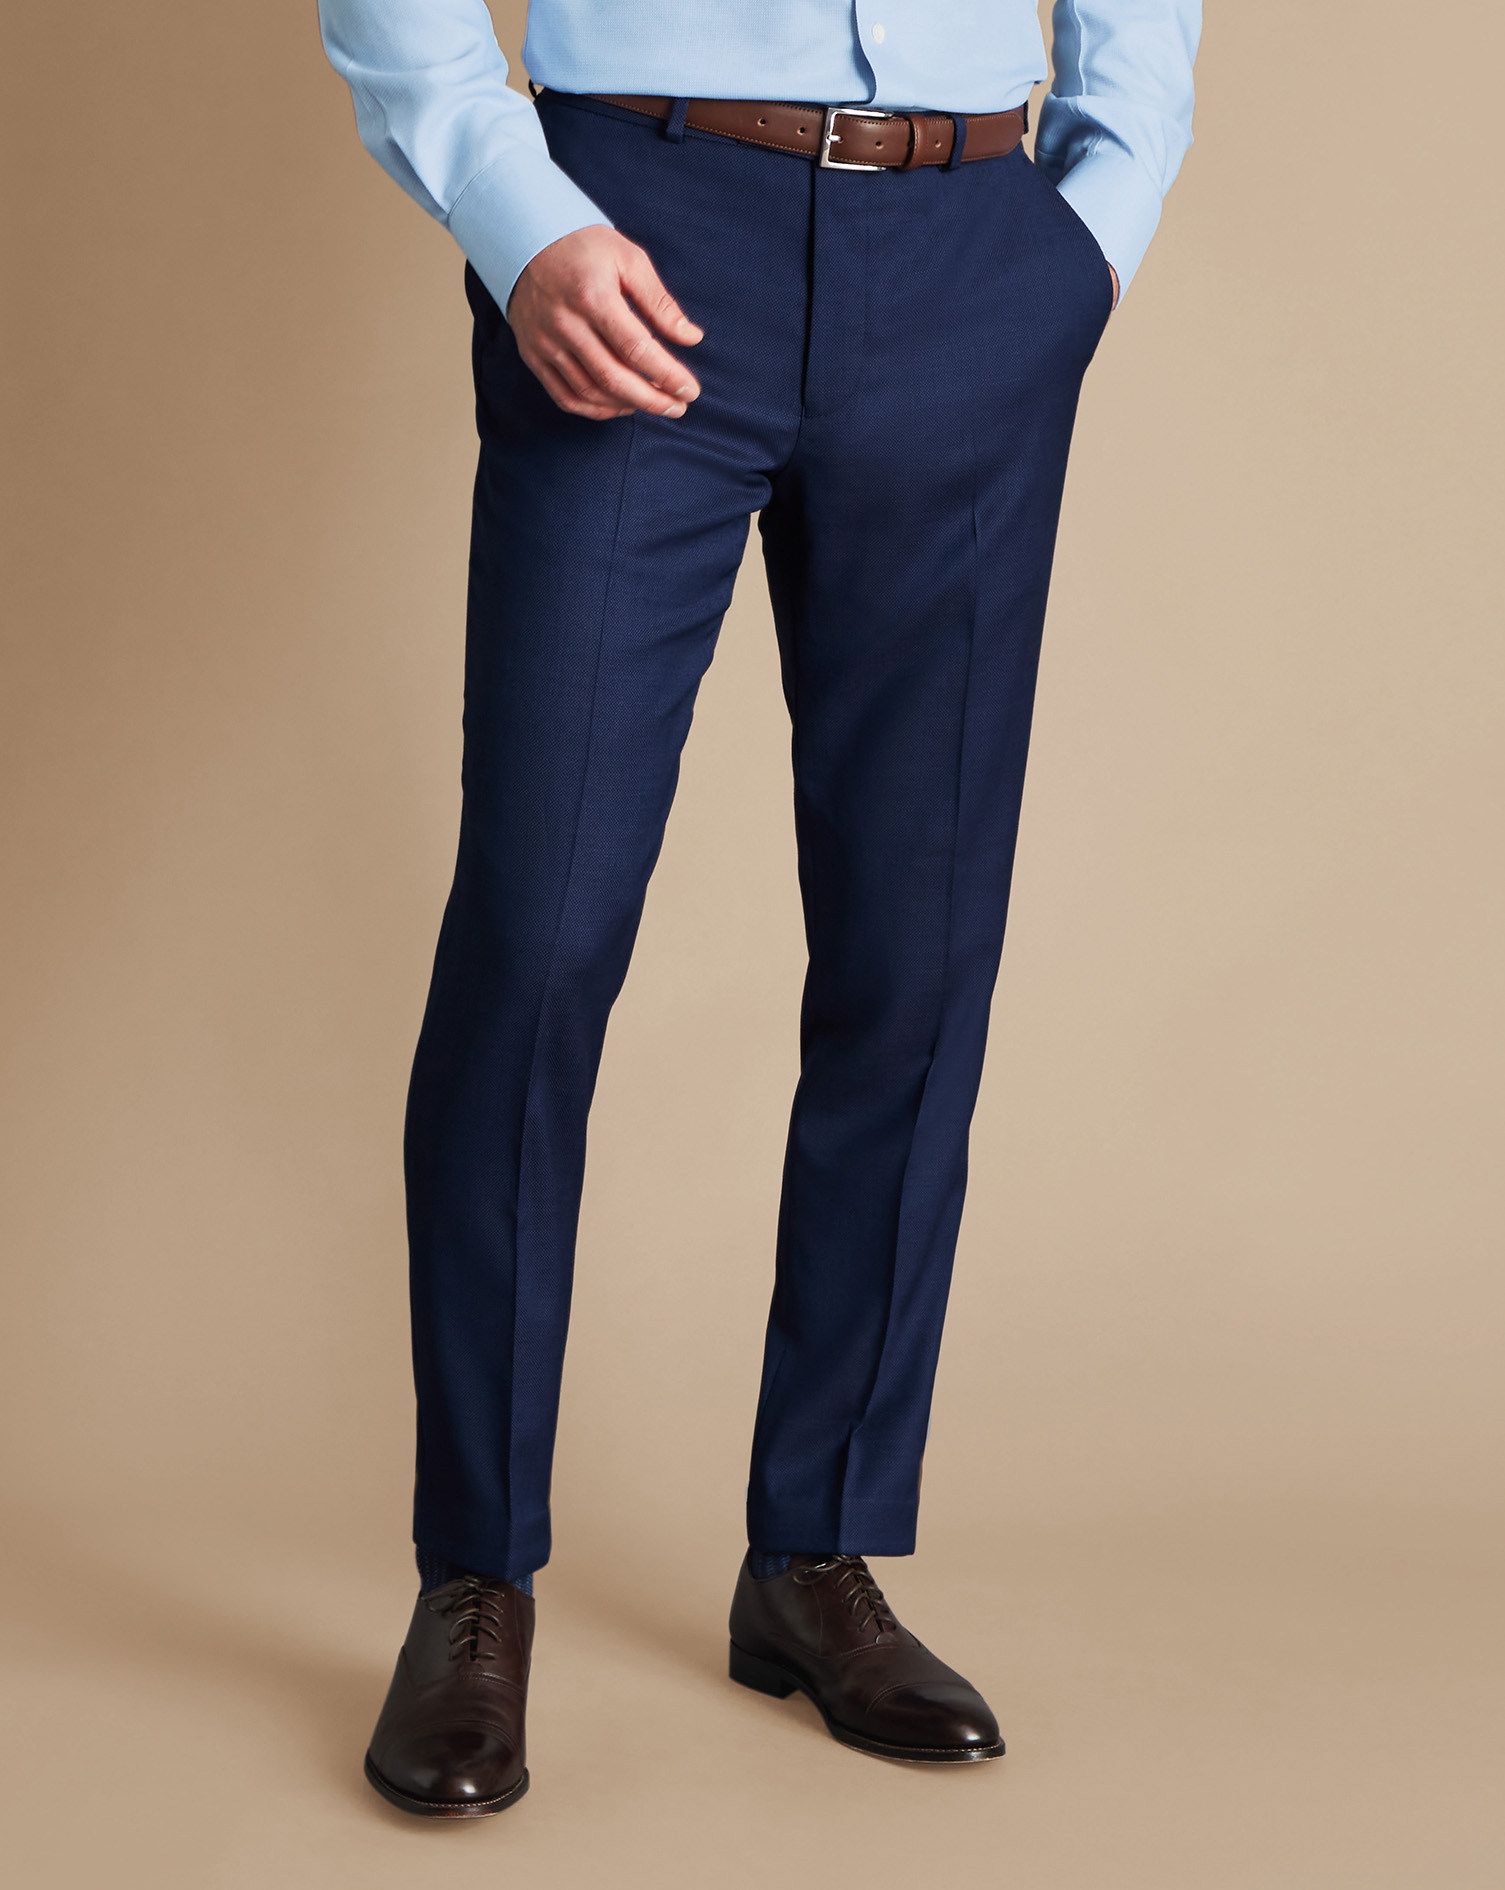 Men's Charles Tyrwhitt Ultimate Performance Birdseye Suit Trousers - Indigo Blue Size 34/32 Wool
